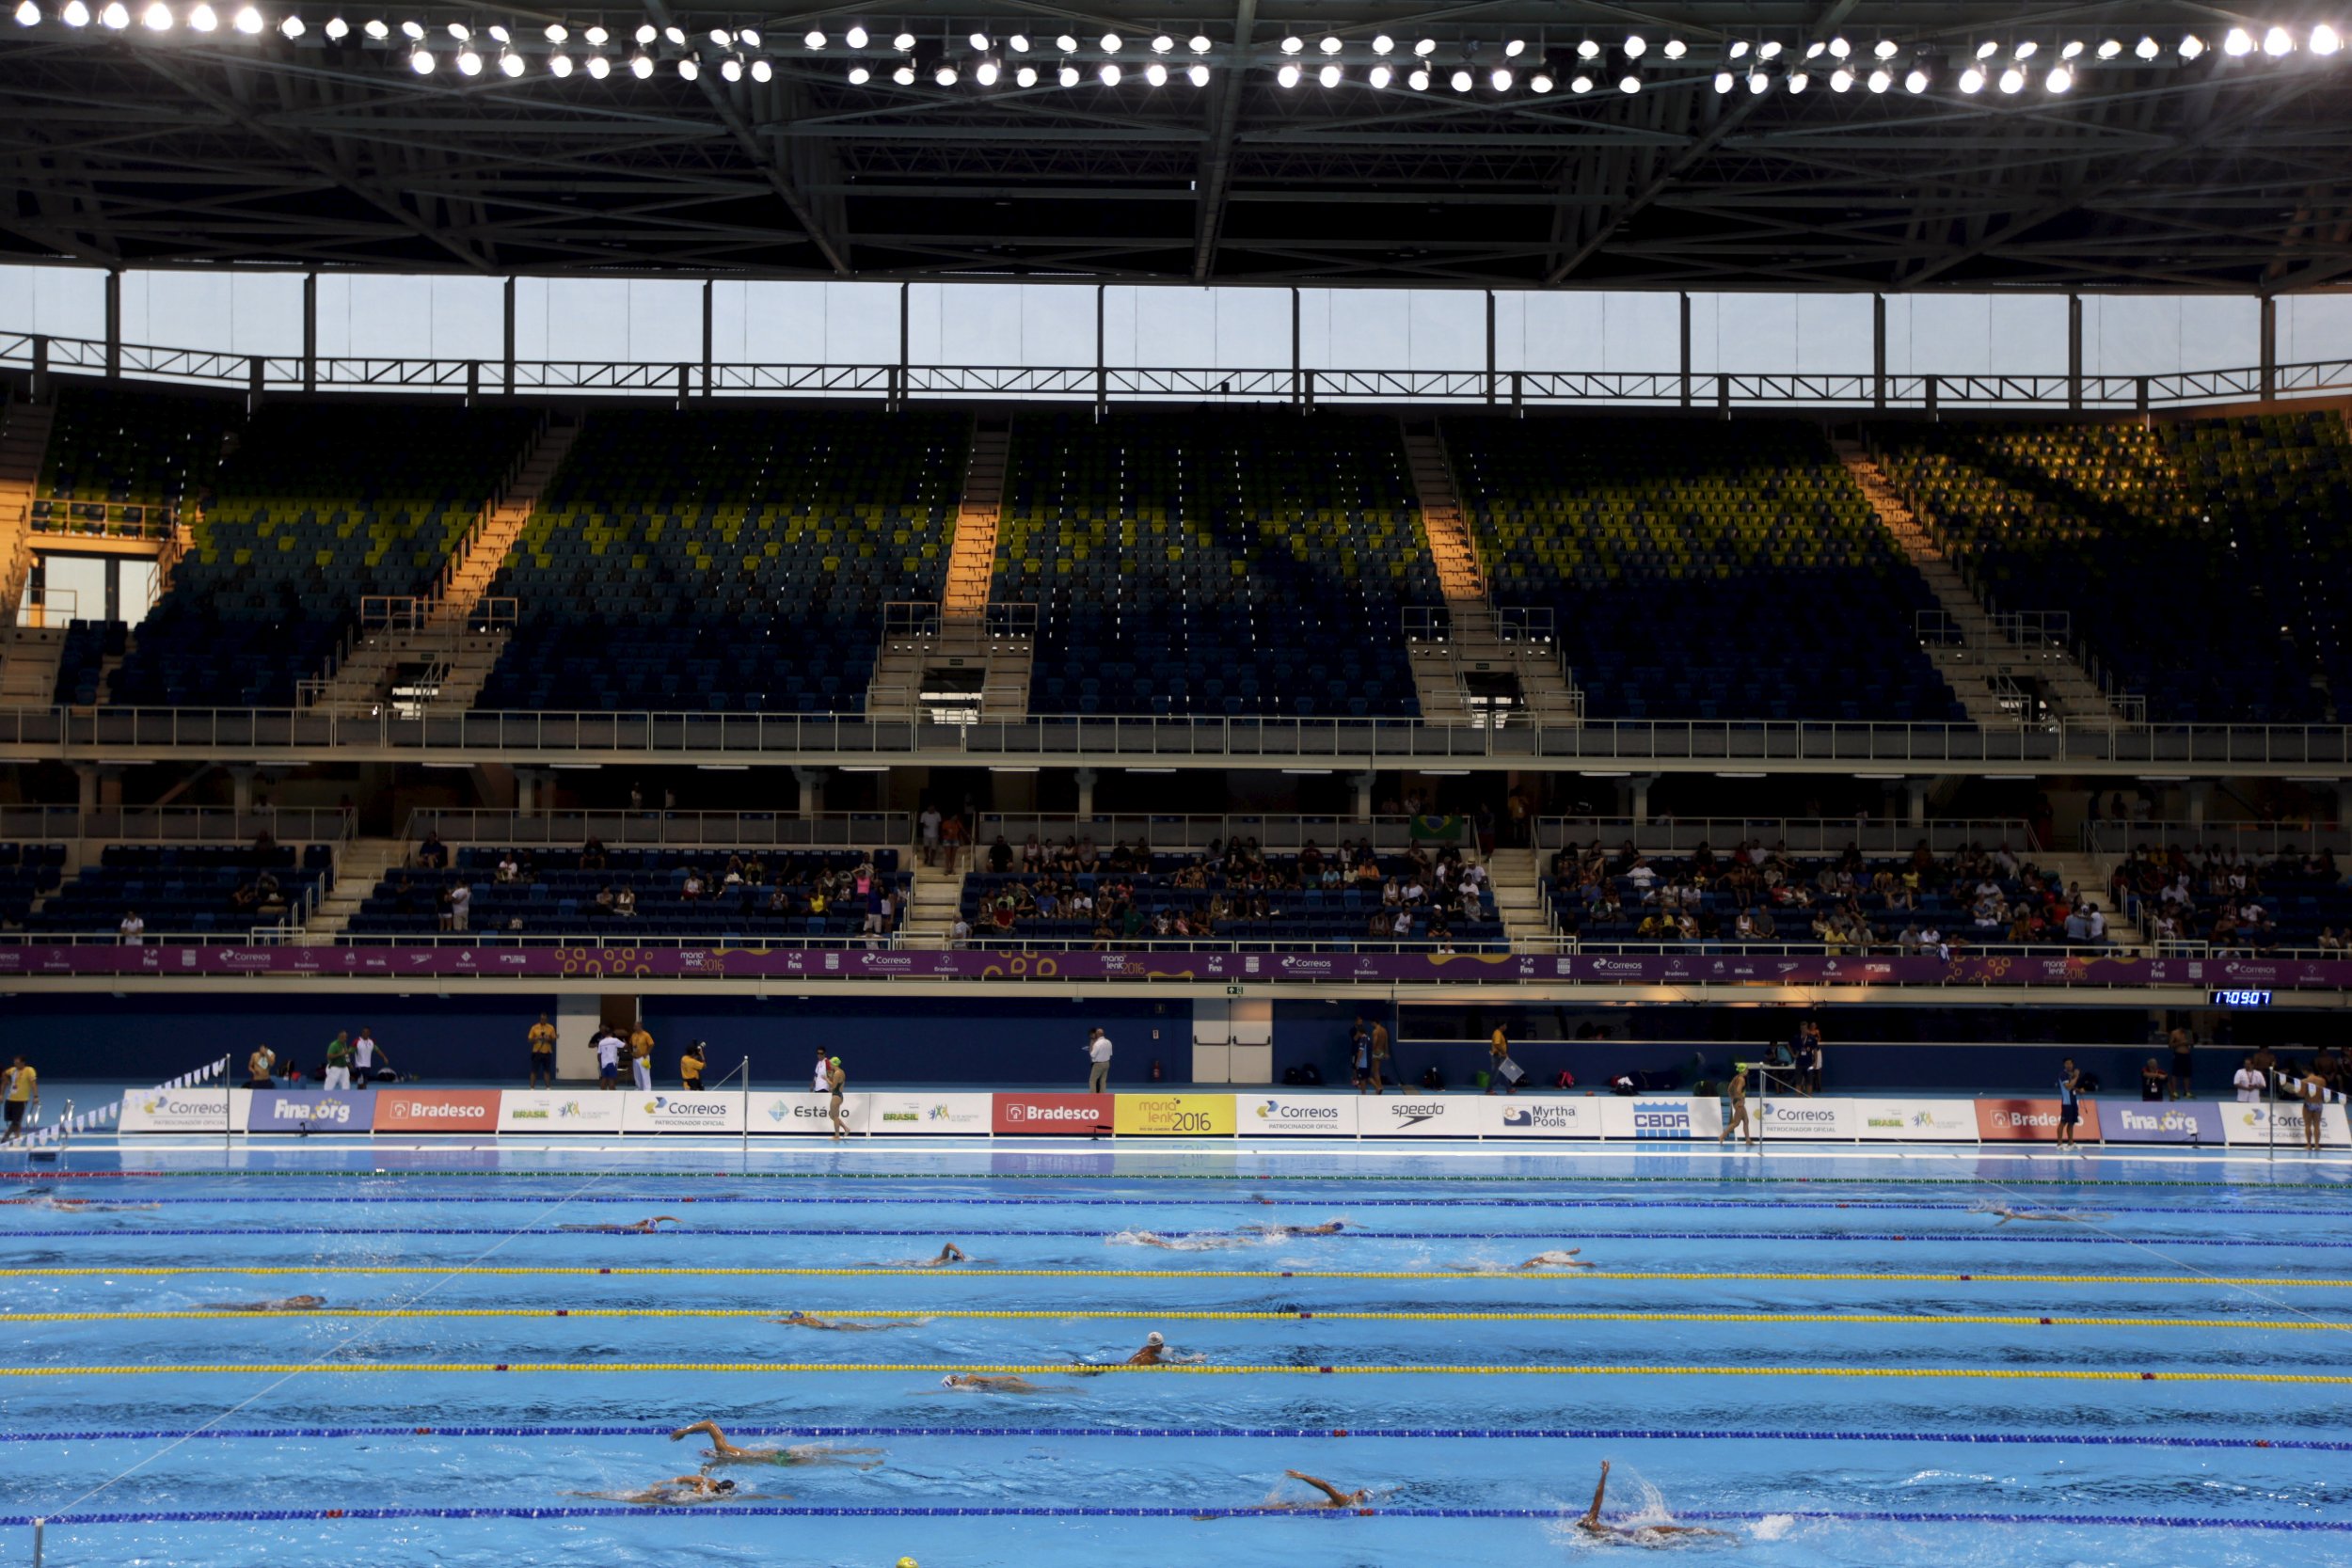 6-10-16 Olympic swimming